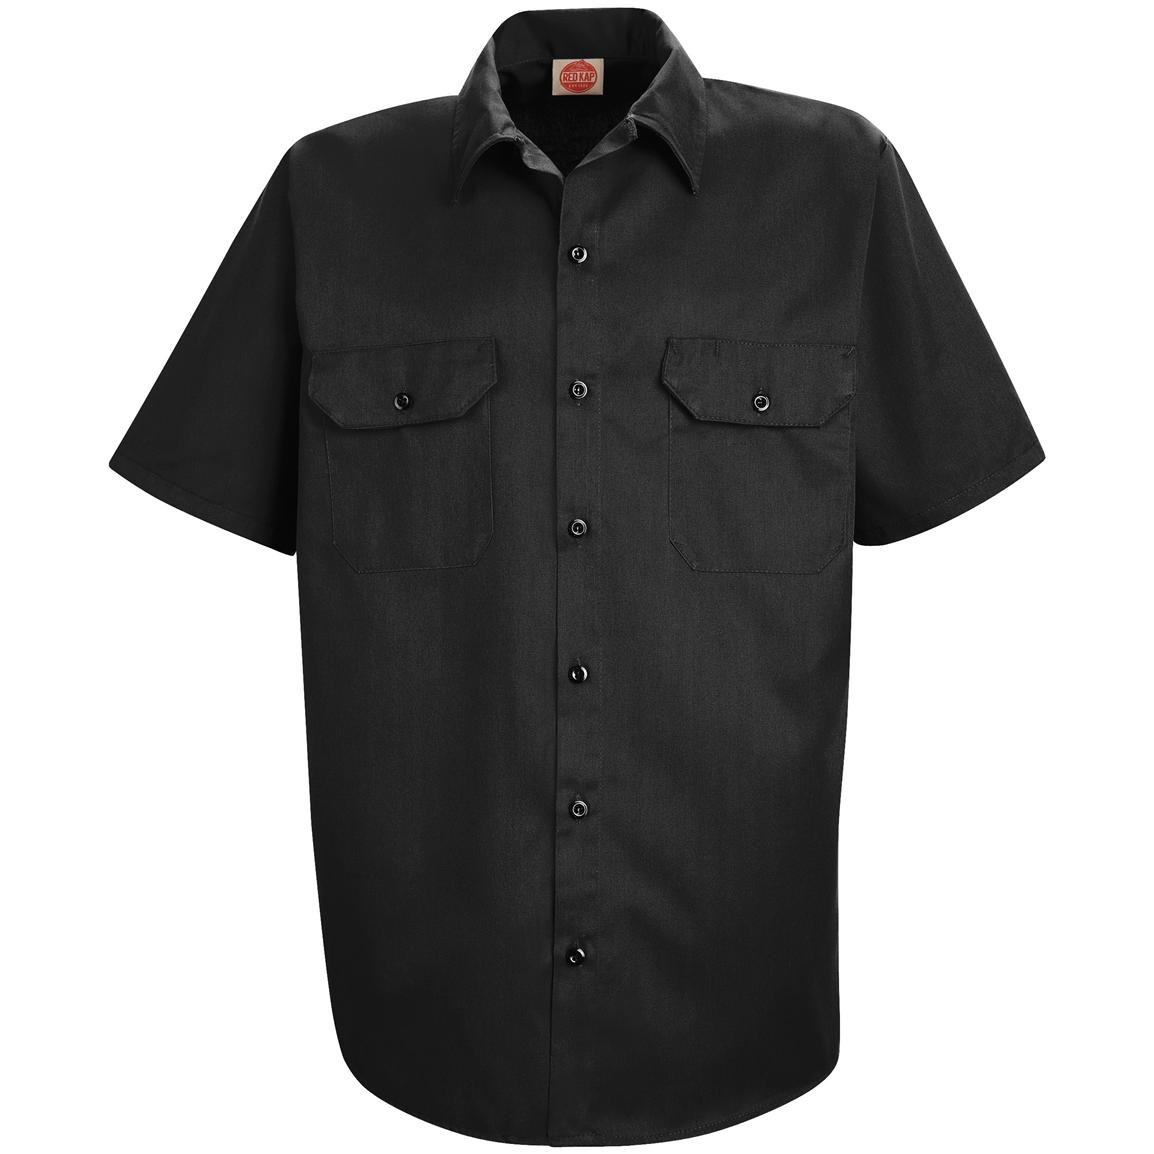 Black Uniform Shirt 46